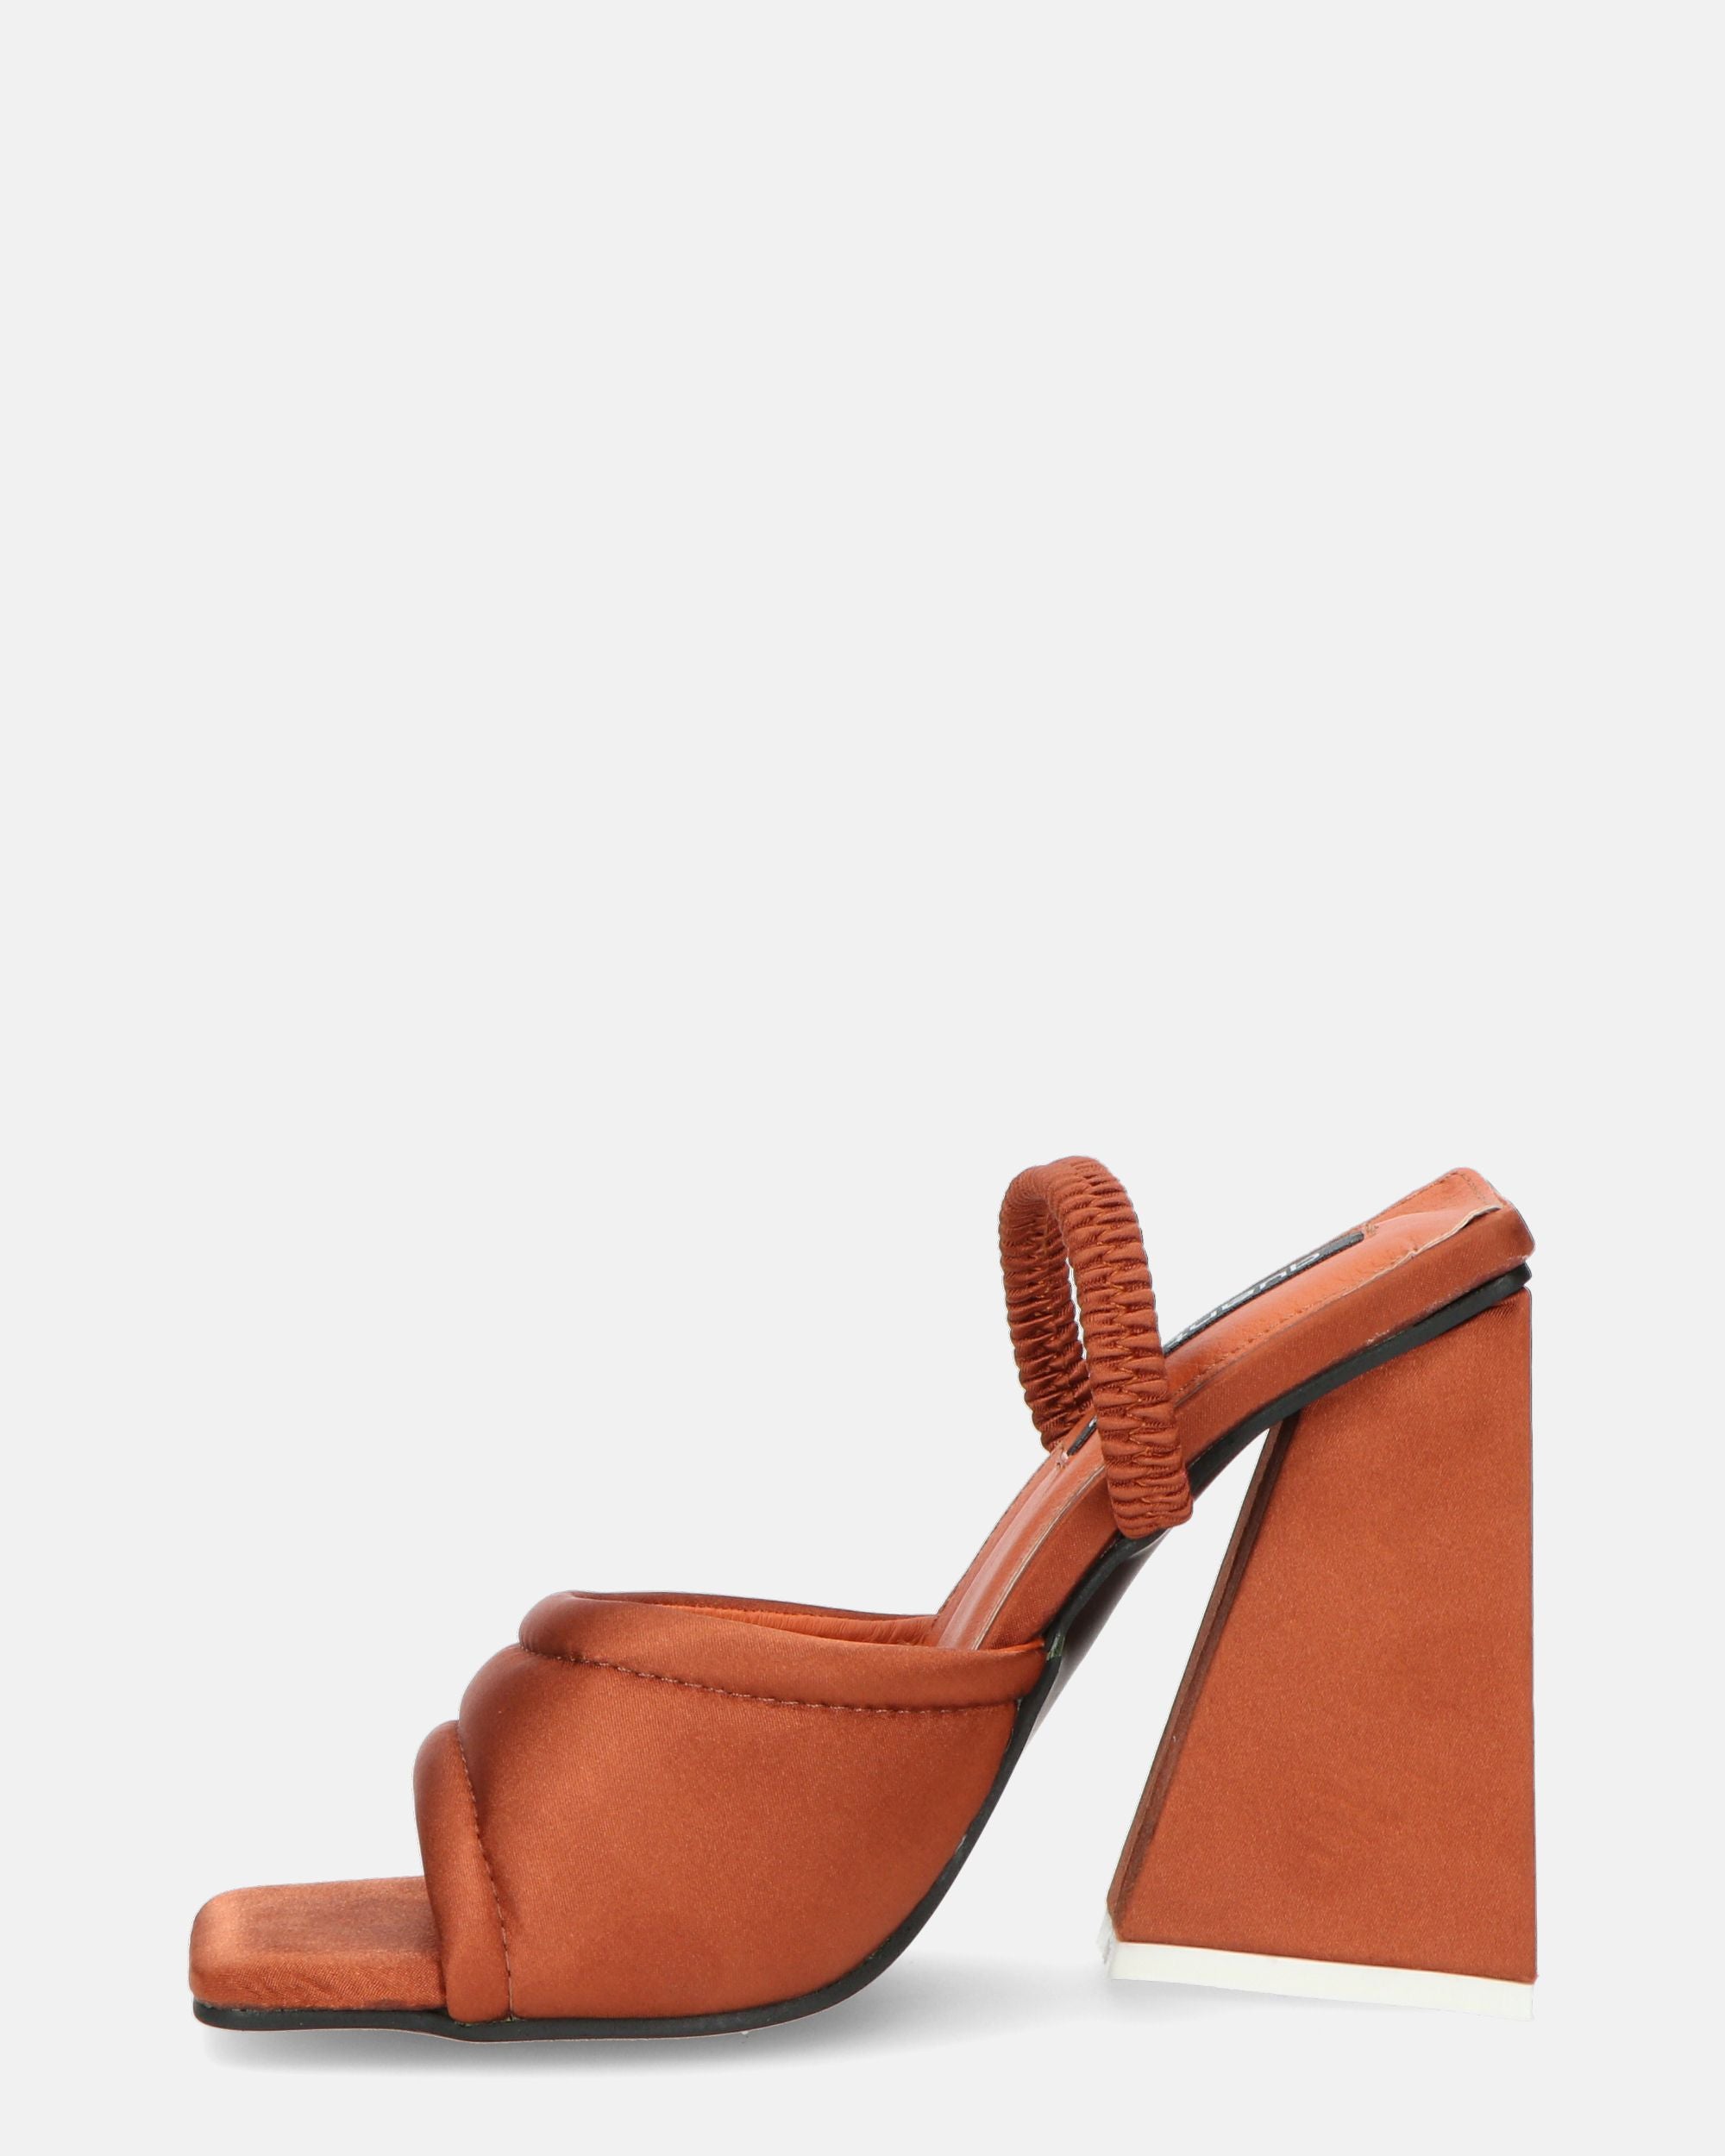 EMMI - brown heeled sandals with elastic